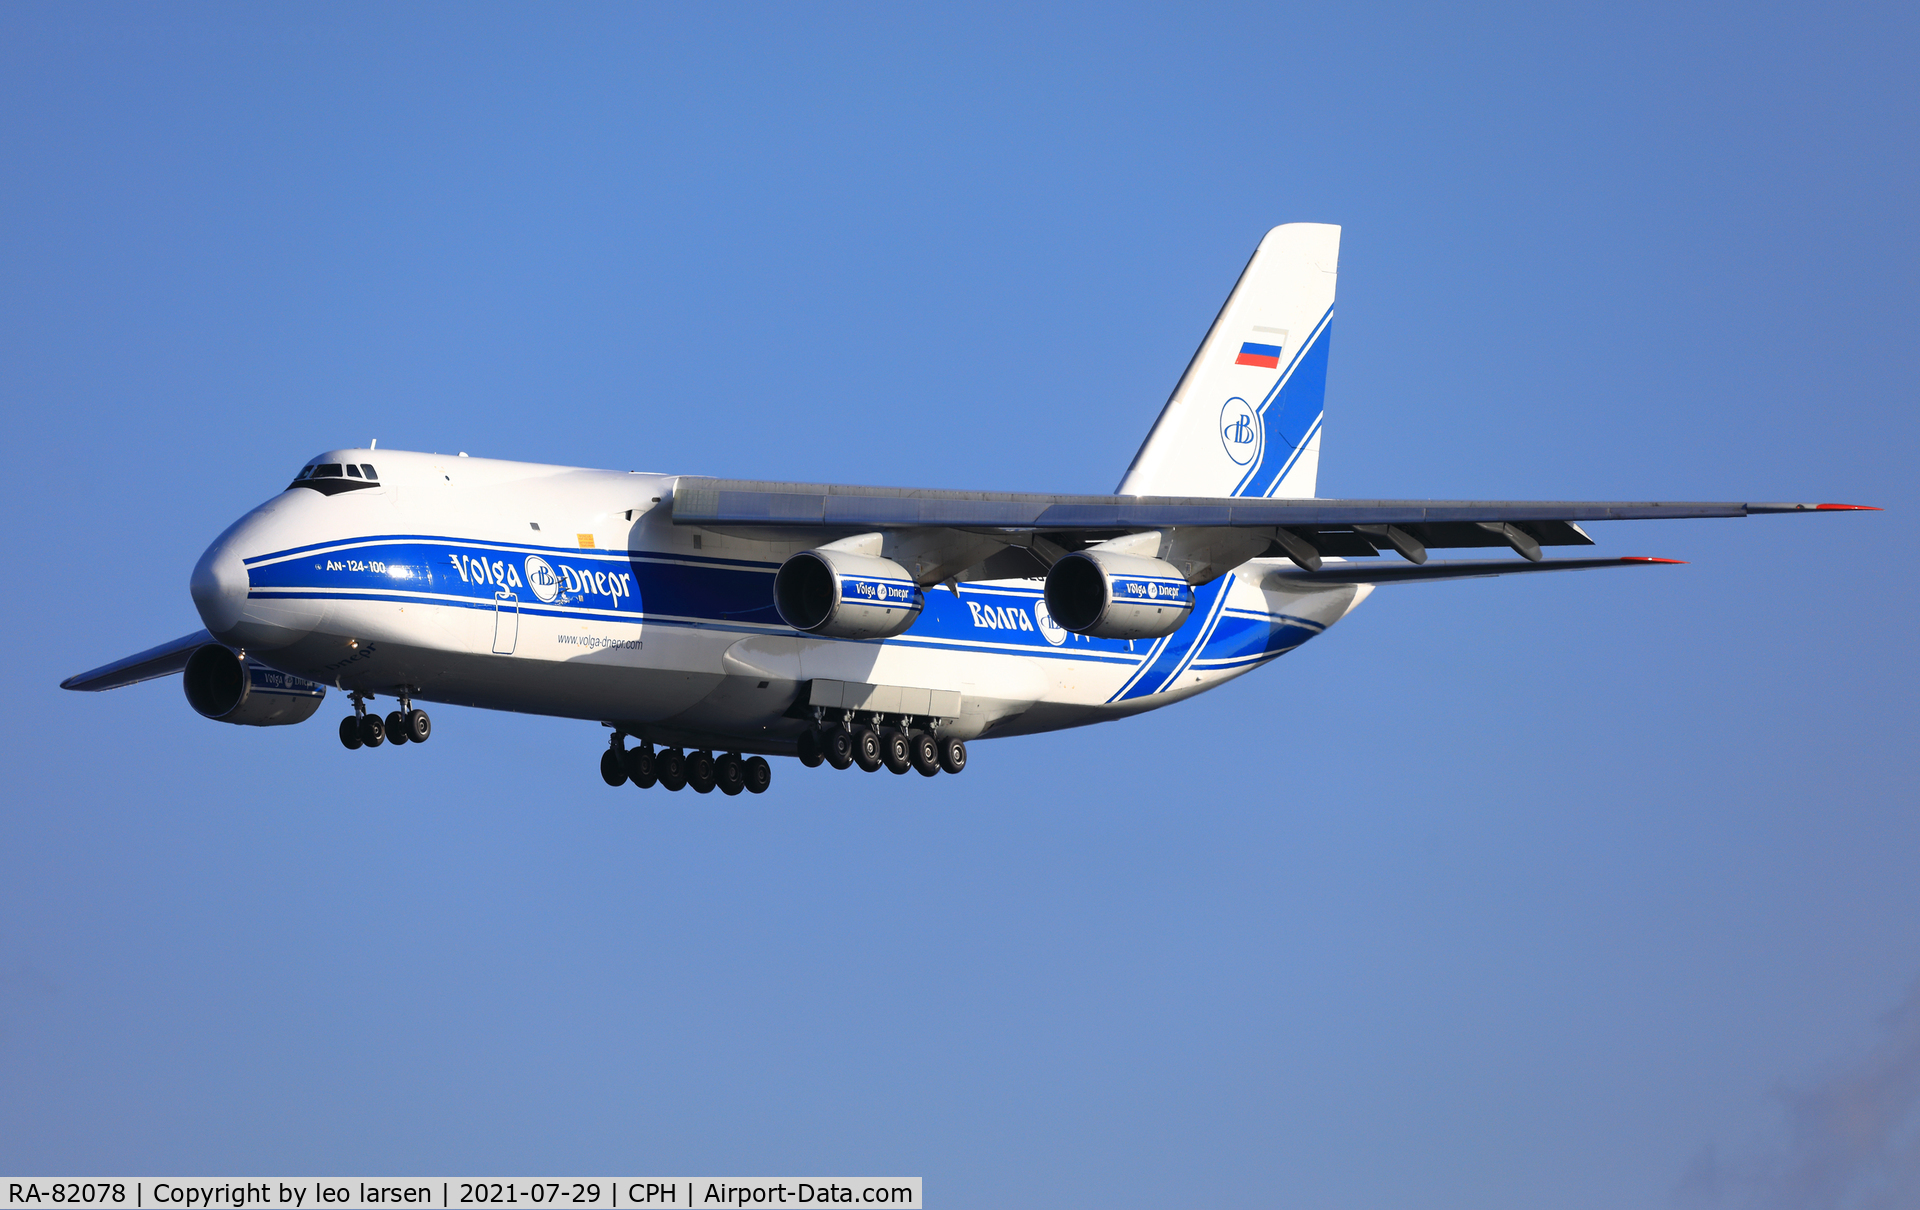 RA-82078, 1996 Antonov An-124-100 Ruslan C/N 9773054559153, Copenhagen 29.7.2021